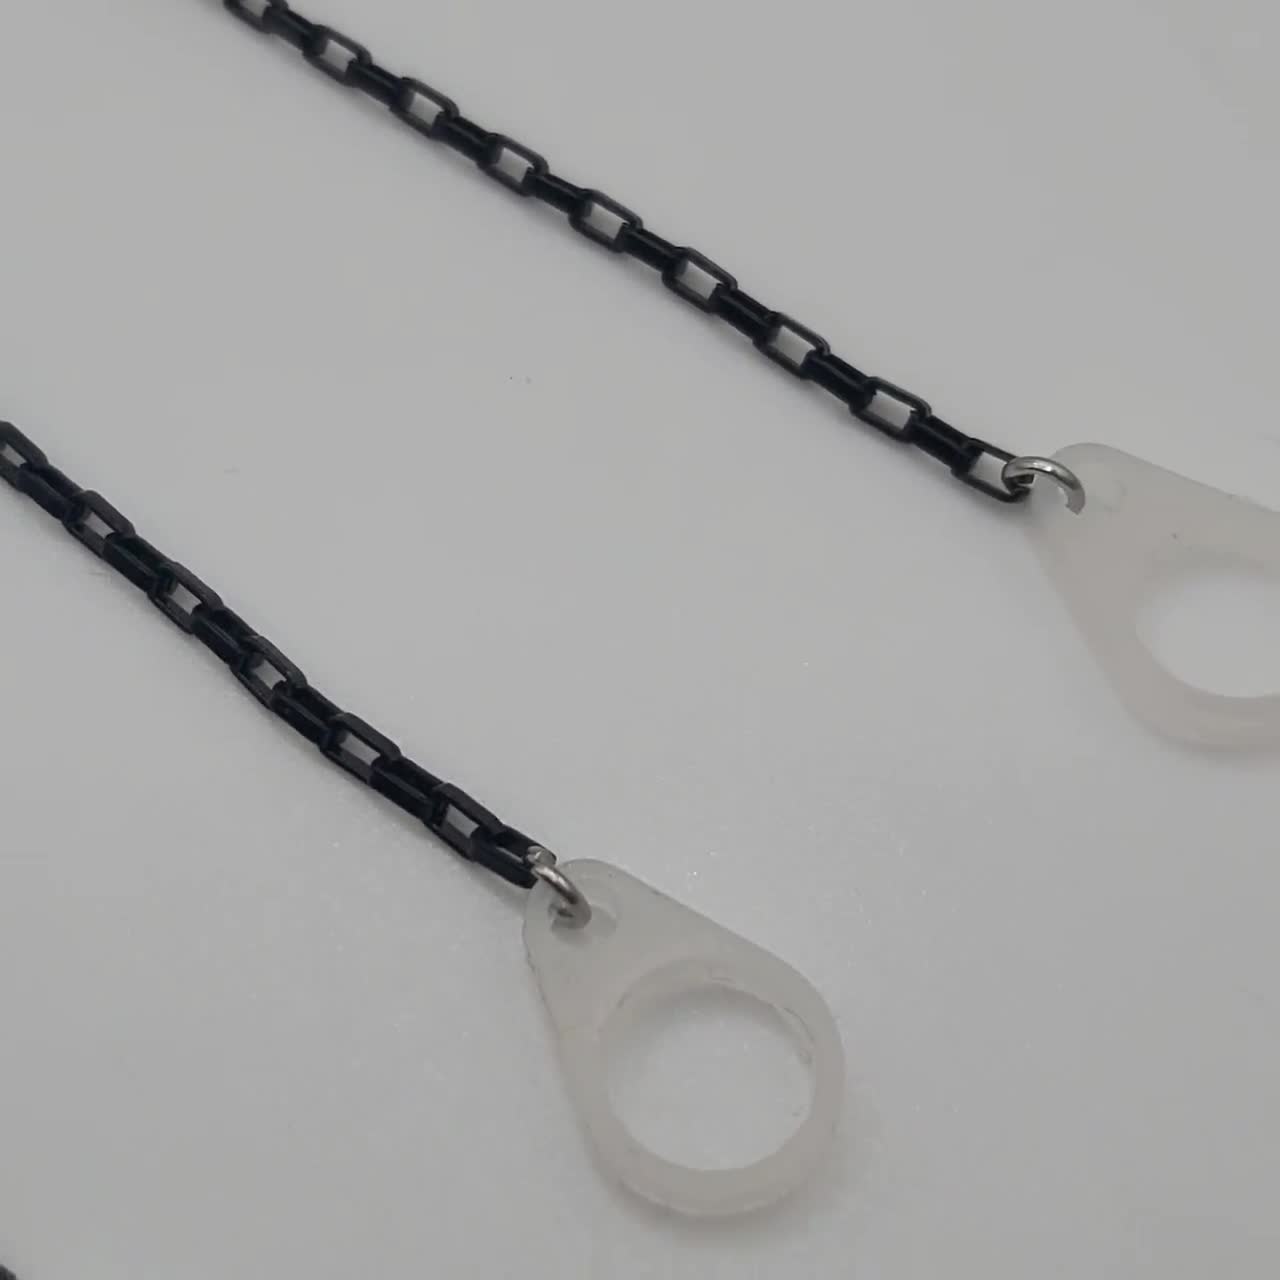 Black cable chain earrings for Loop Earplugs – Purple Heart Design